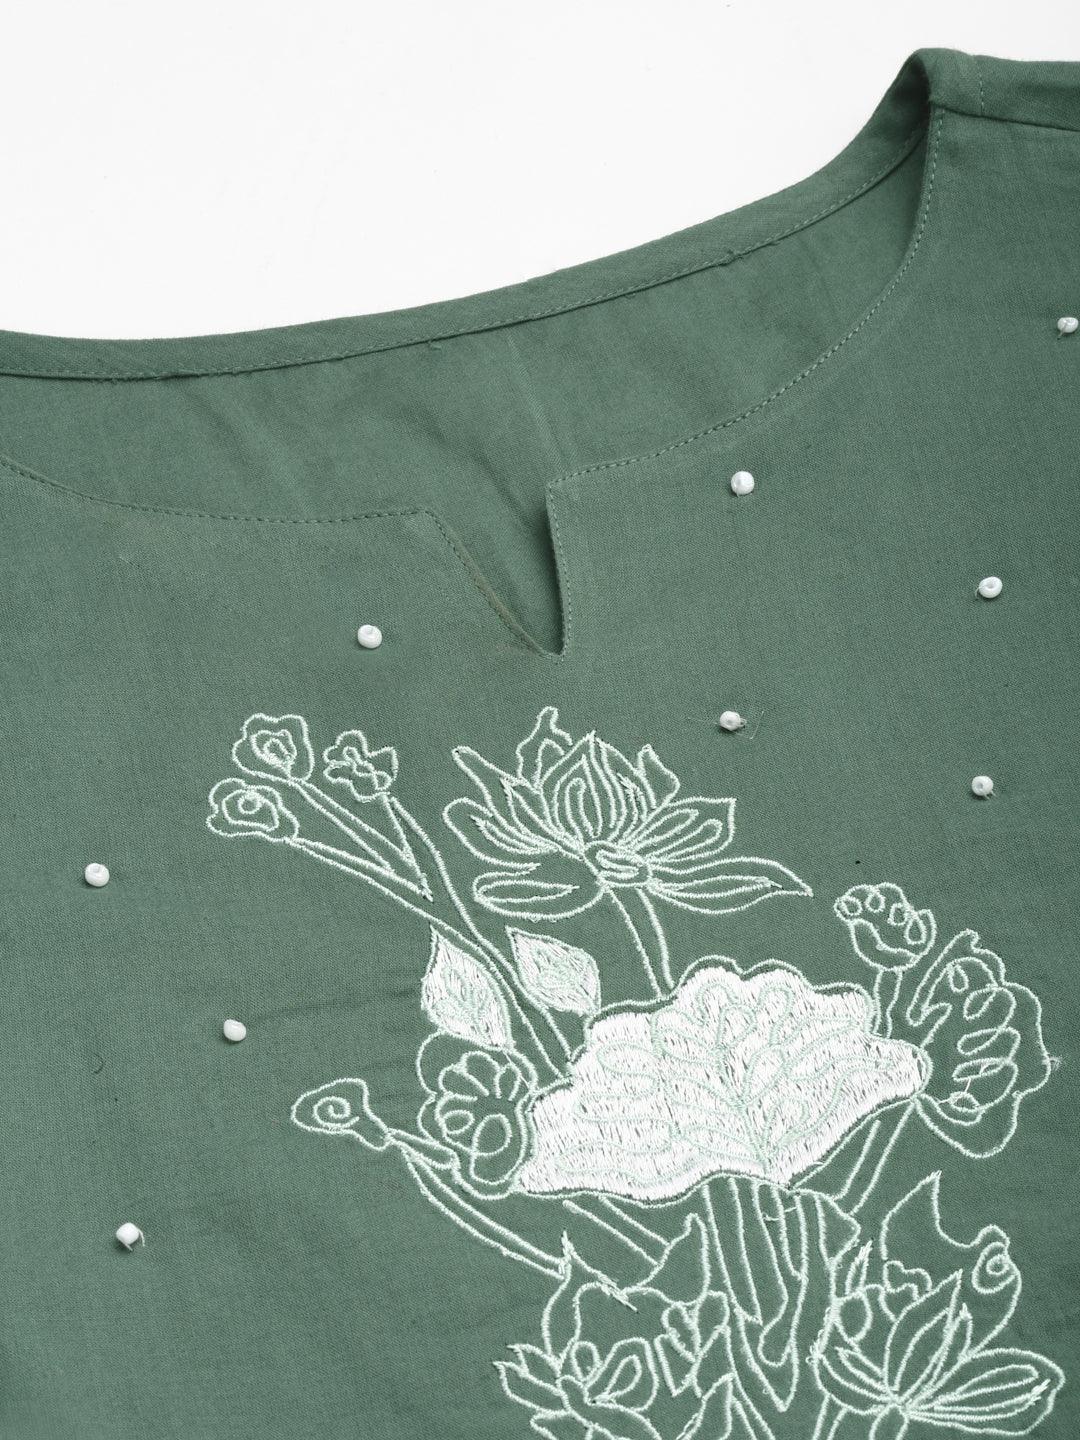 Asya Olive Floral Embroidered Dress - Uboric